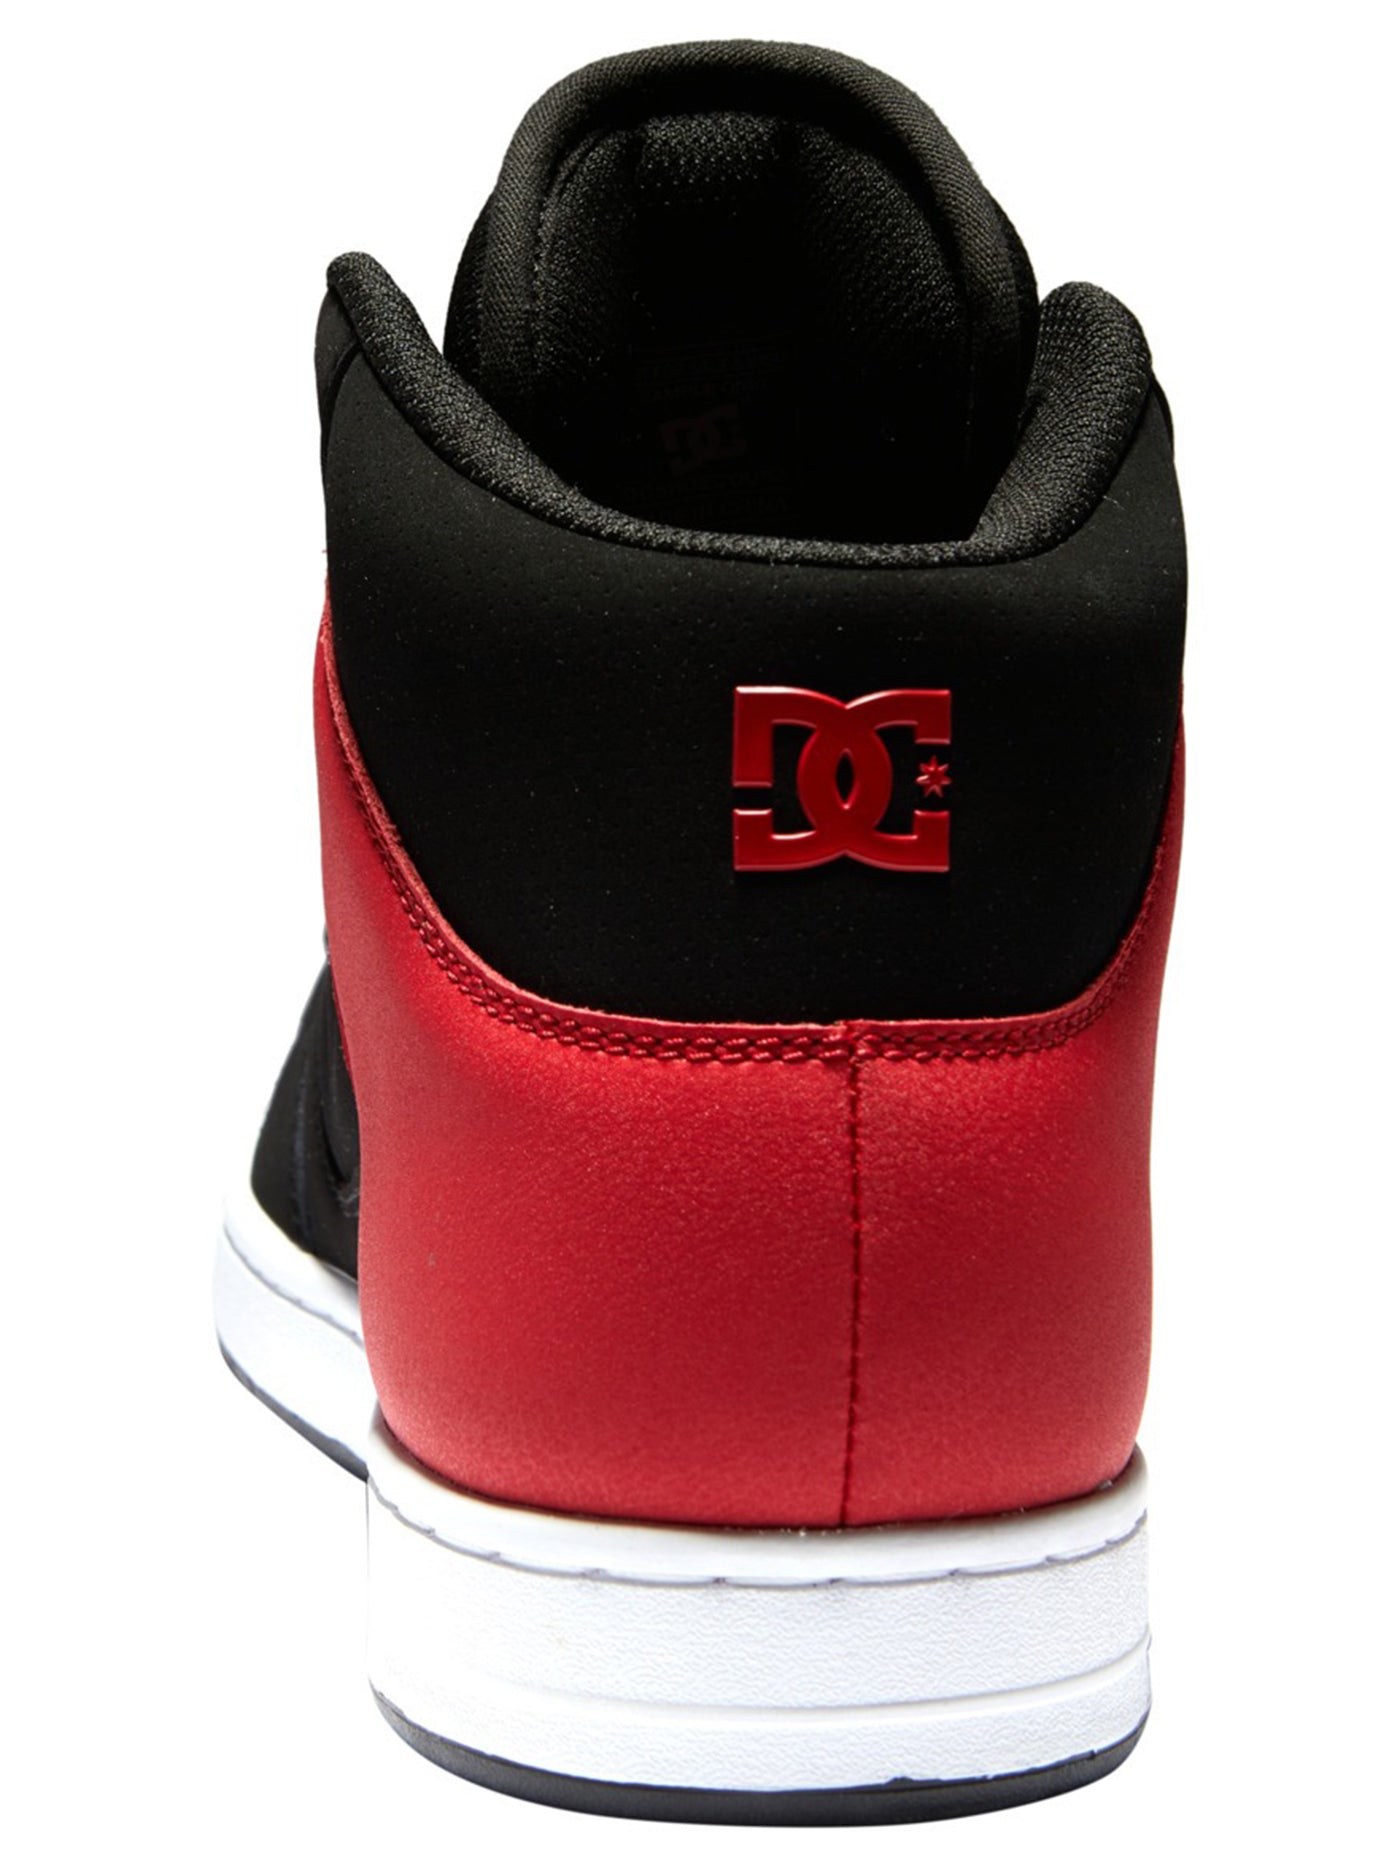 DC Manteca 4 Hi Black/Red Shoes